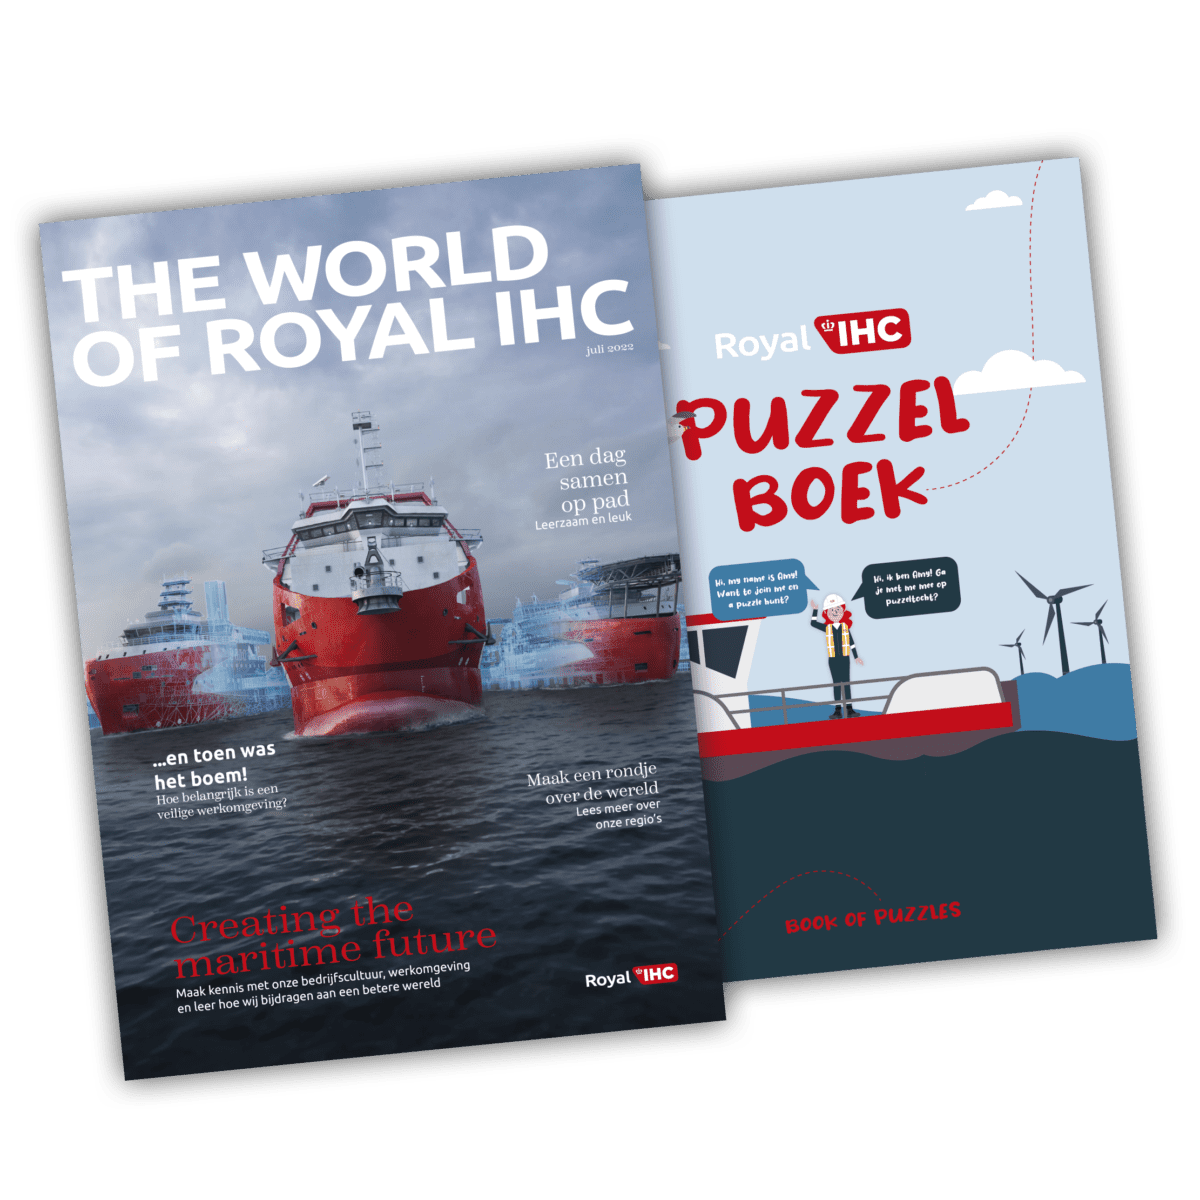 The World of Royal IHC